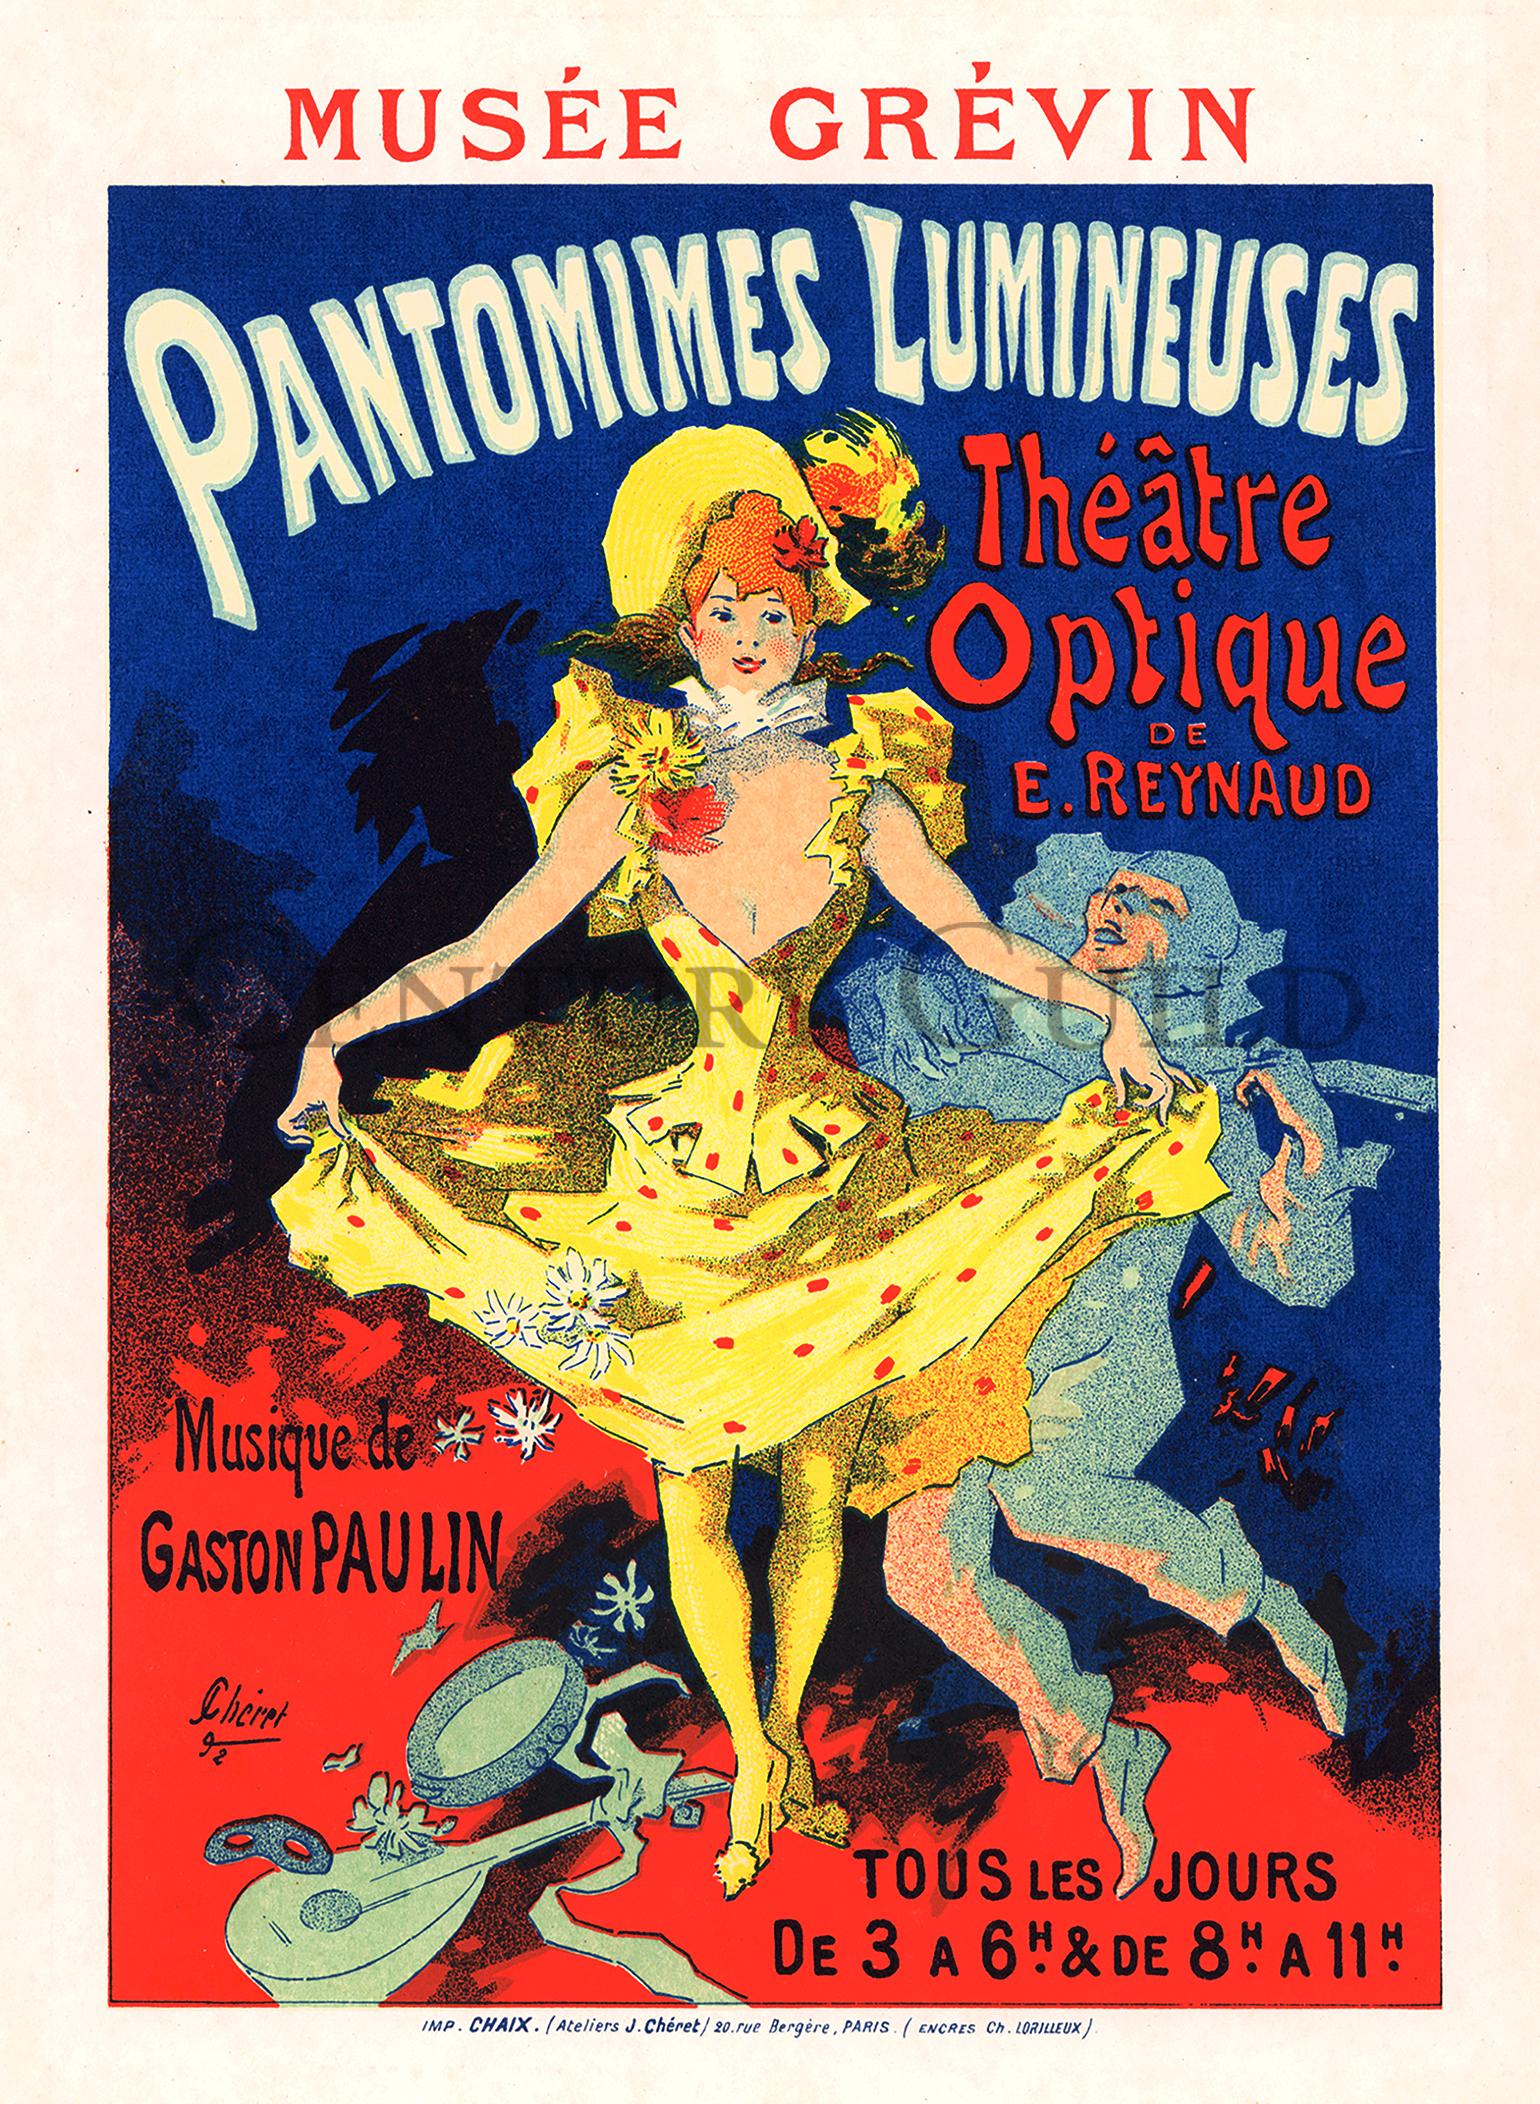 Musée Grévin, Pantomimes Lumineuses by Jules Cheret, Commedia lithograph, 1896 